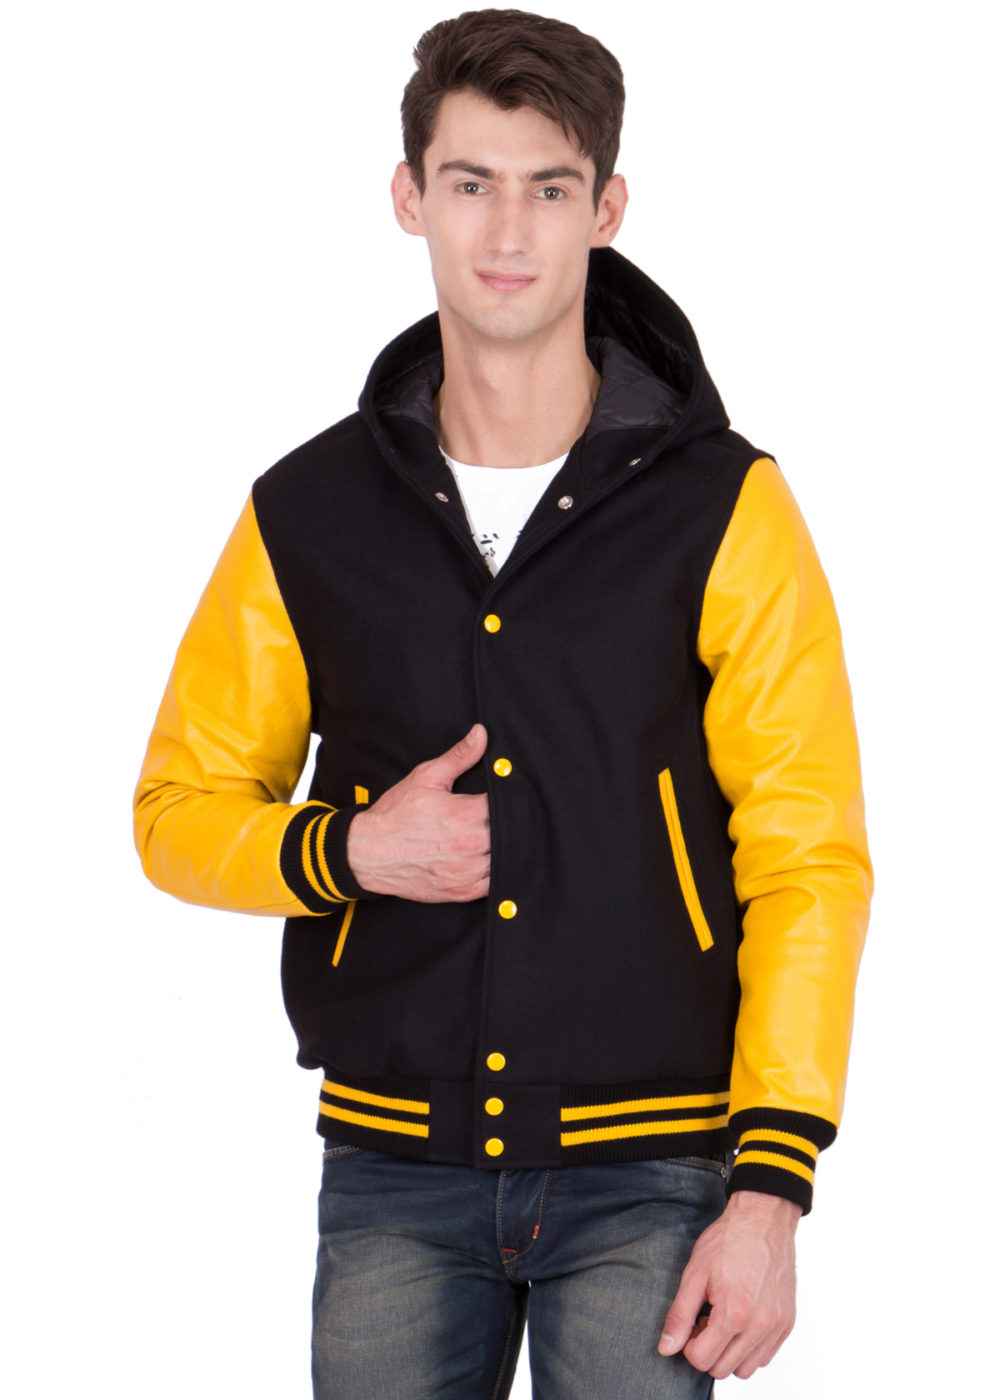 Mens black and yellow varsity jacket